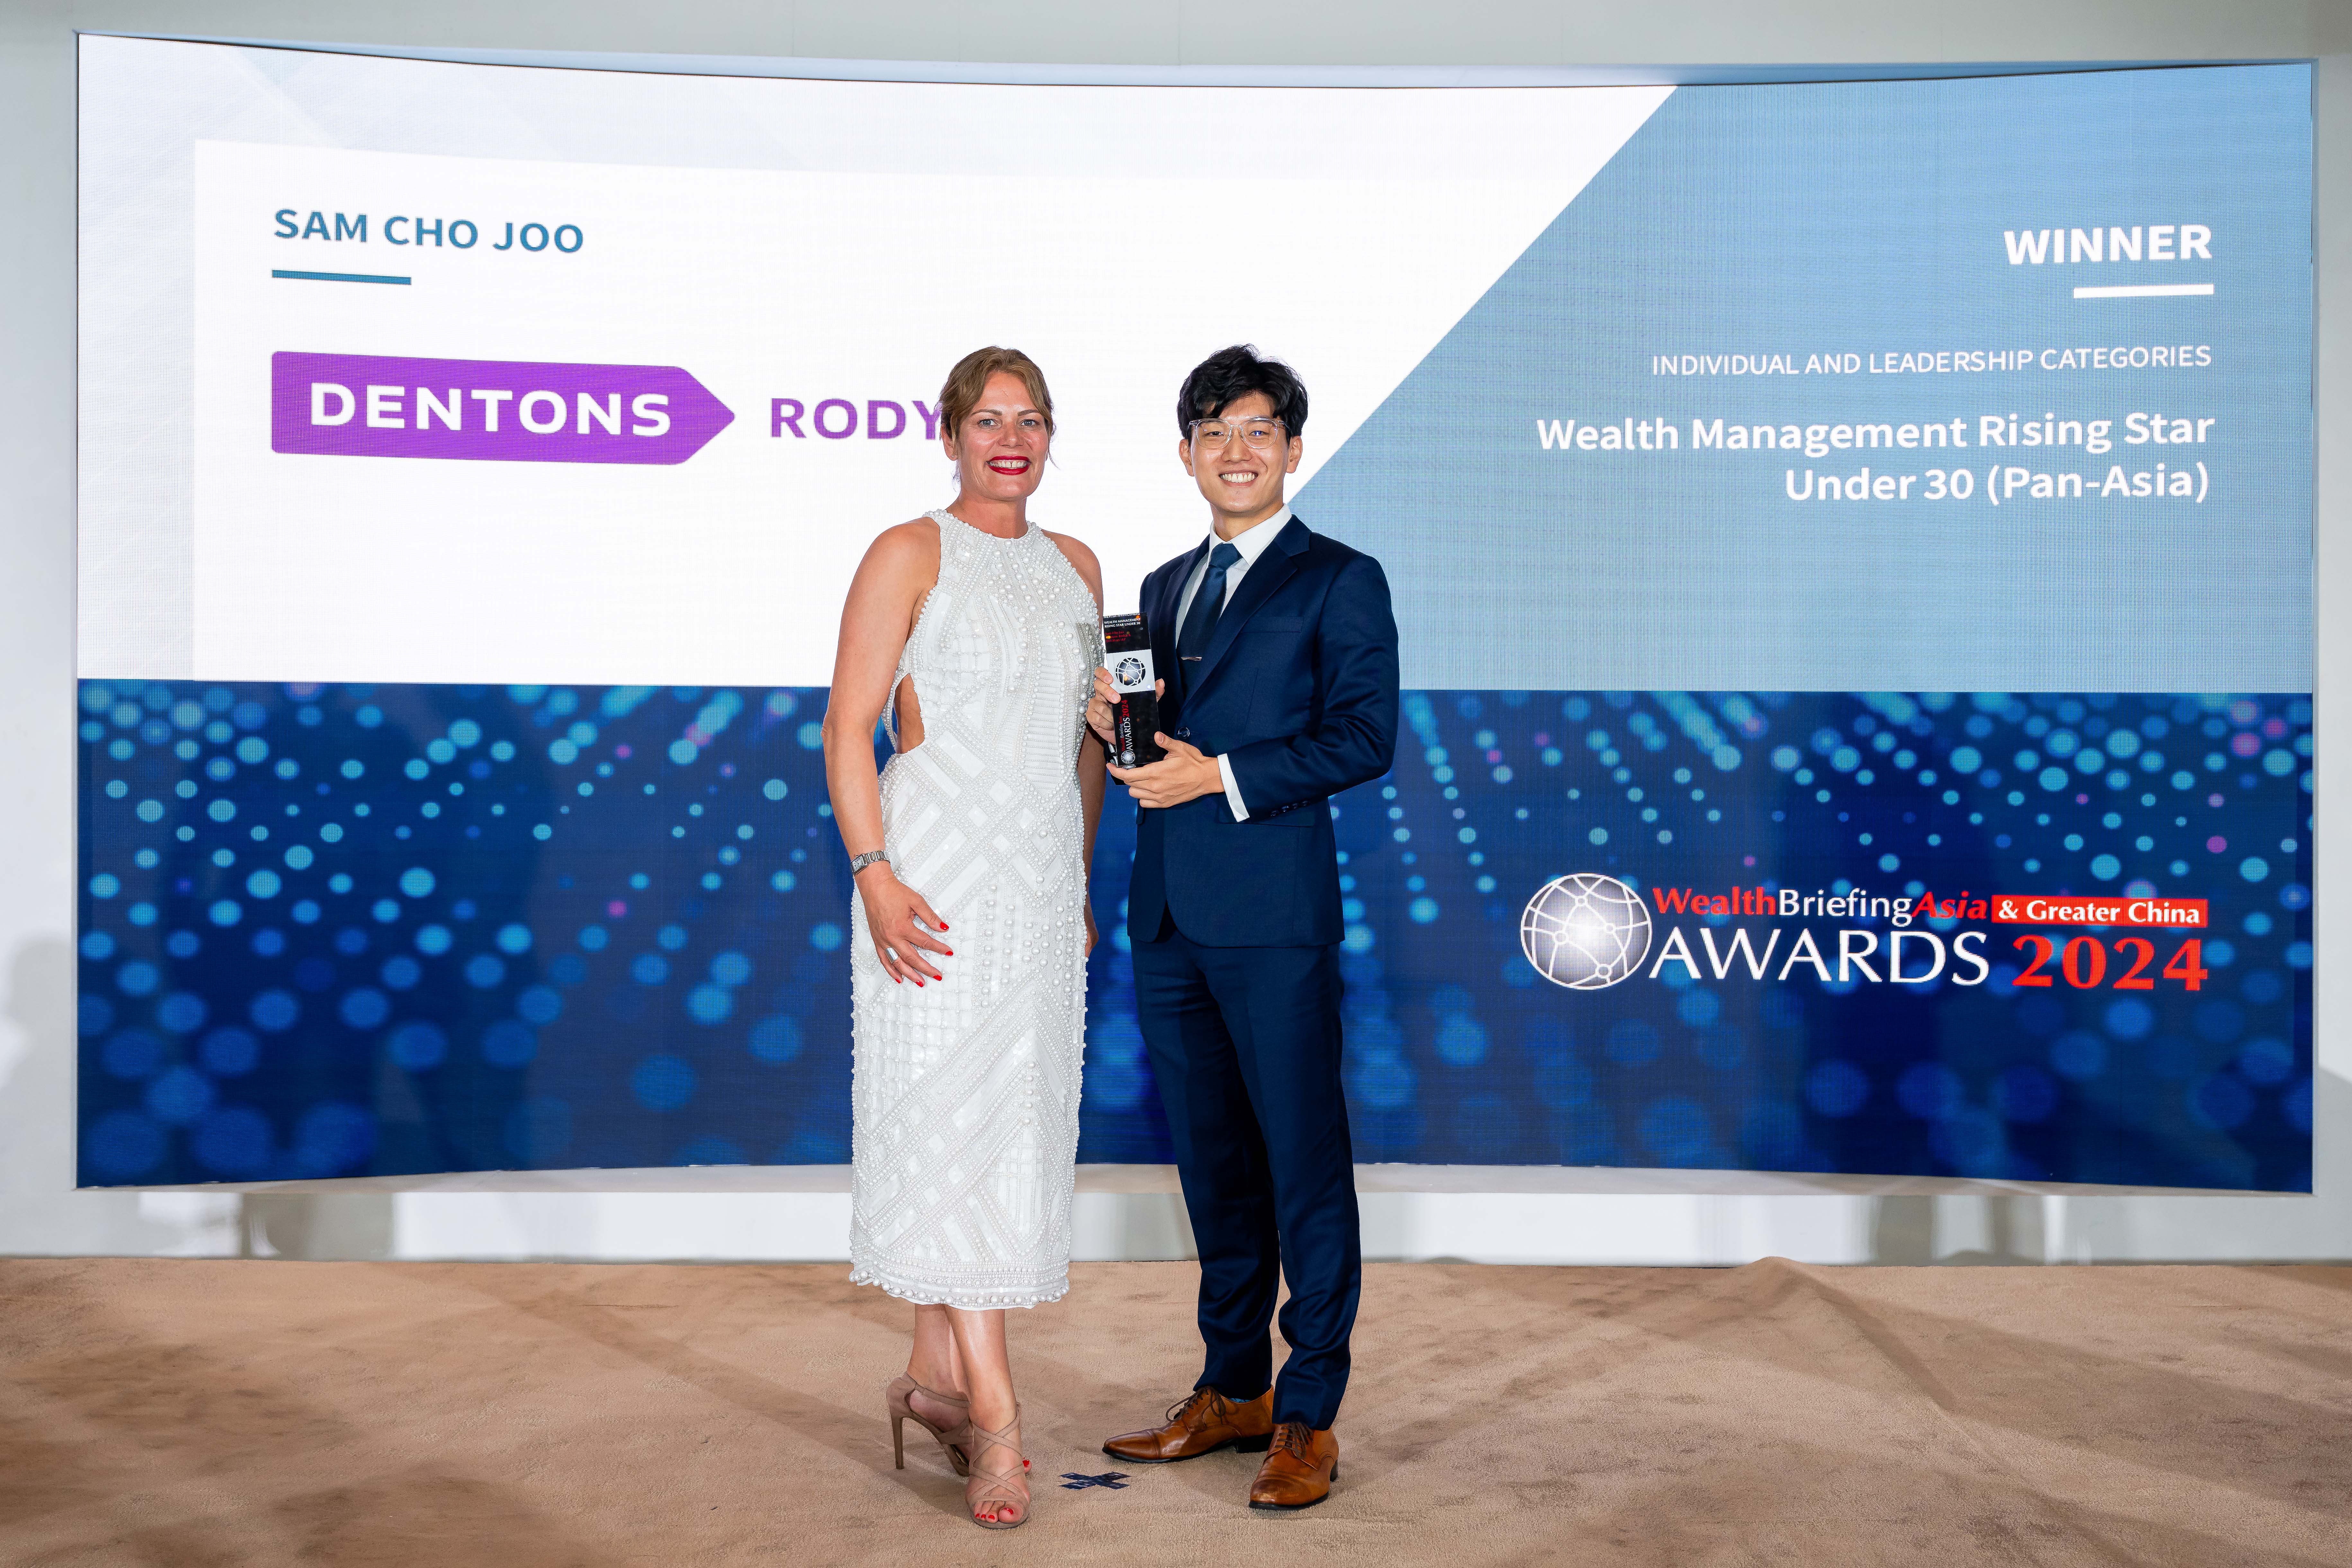 Associate Cho Joo Sam receives the Wealth Management Rising Star Under 30 (Pan-Asia) Award